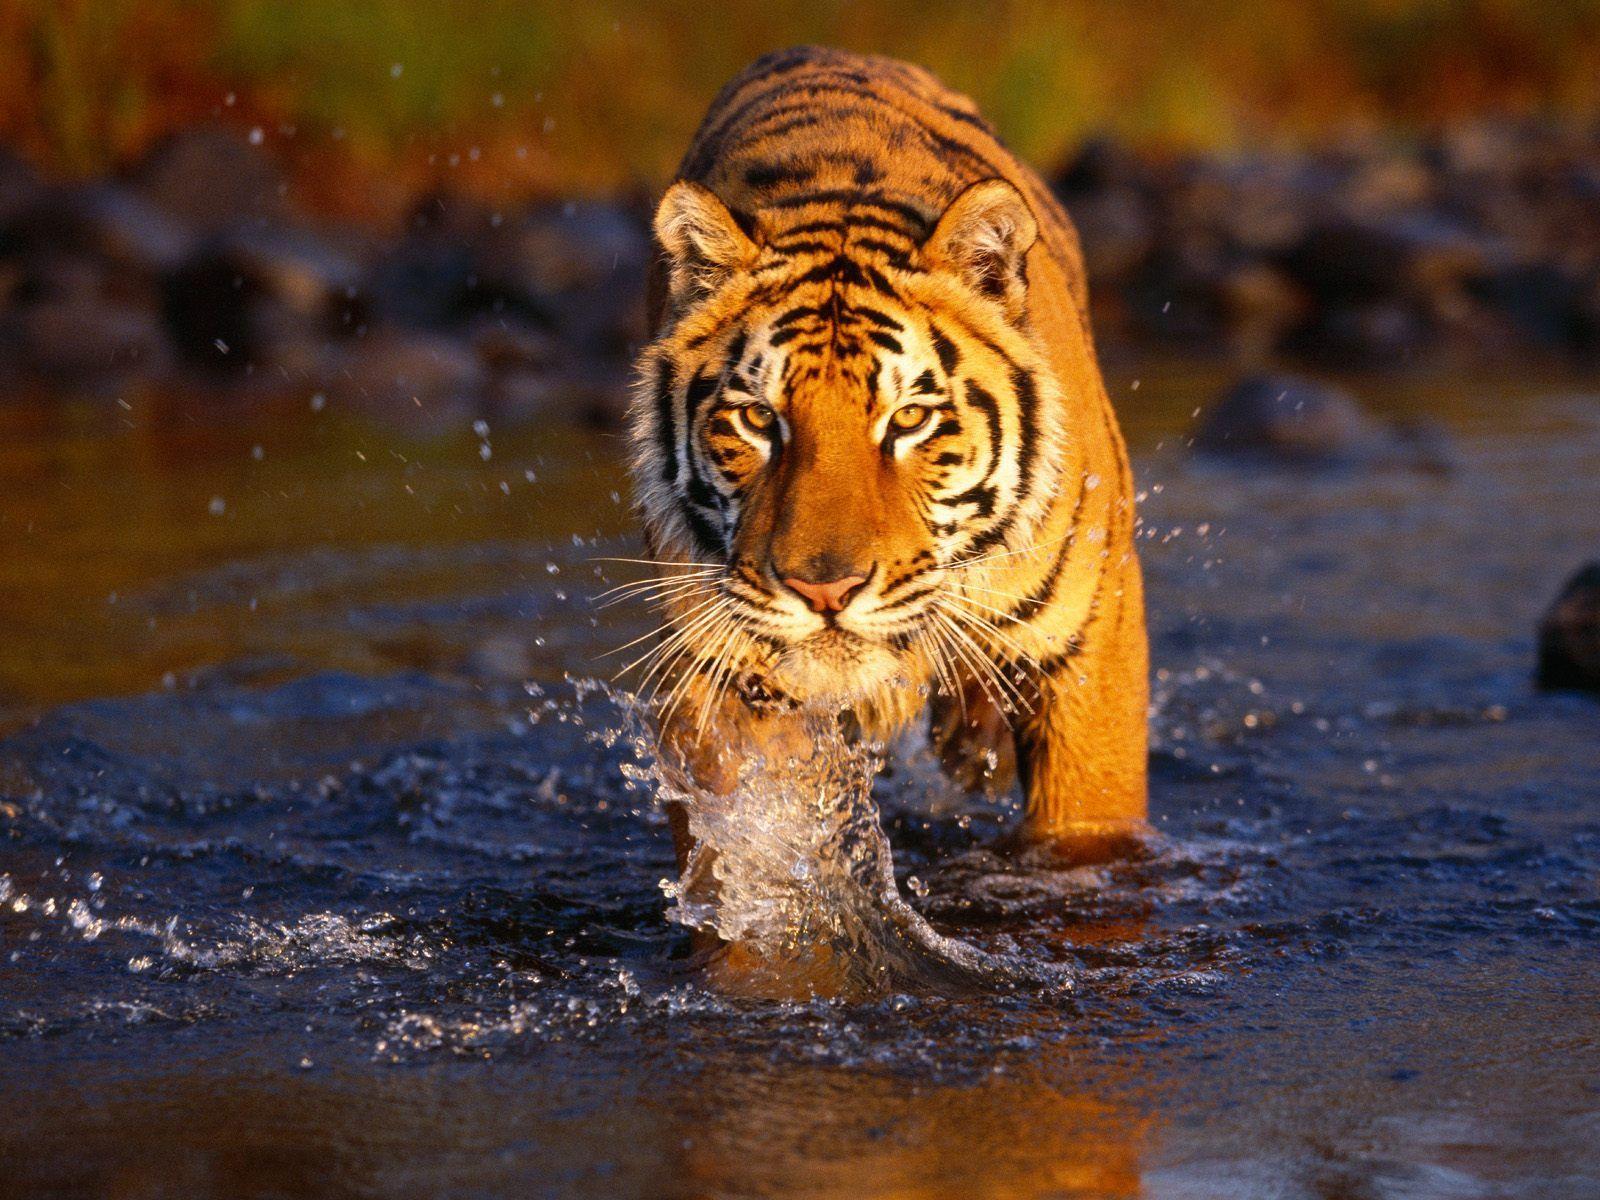 tiger desktop wallpaper